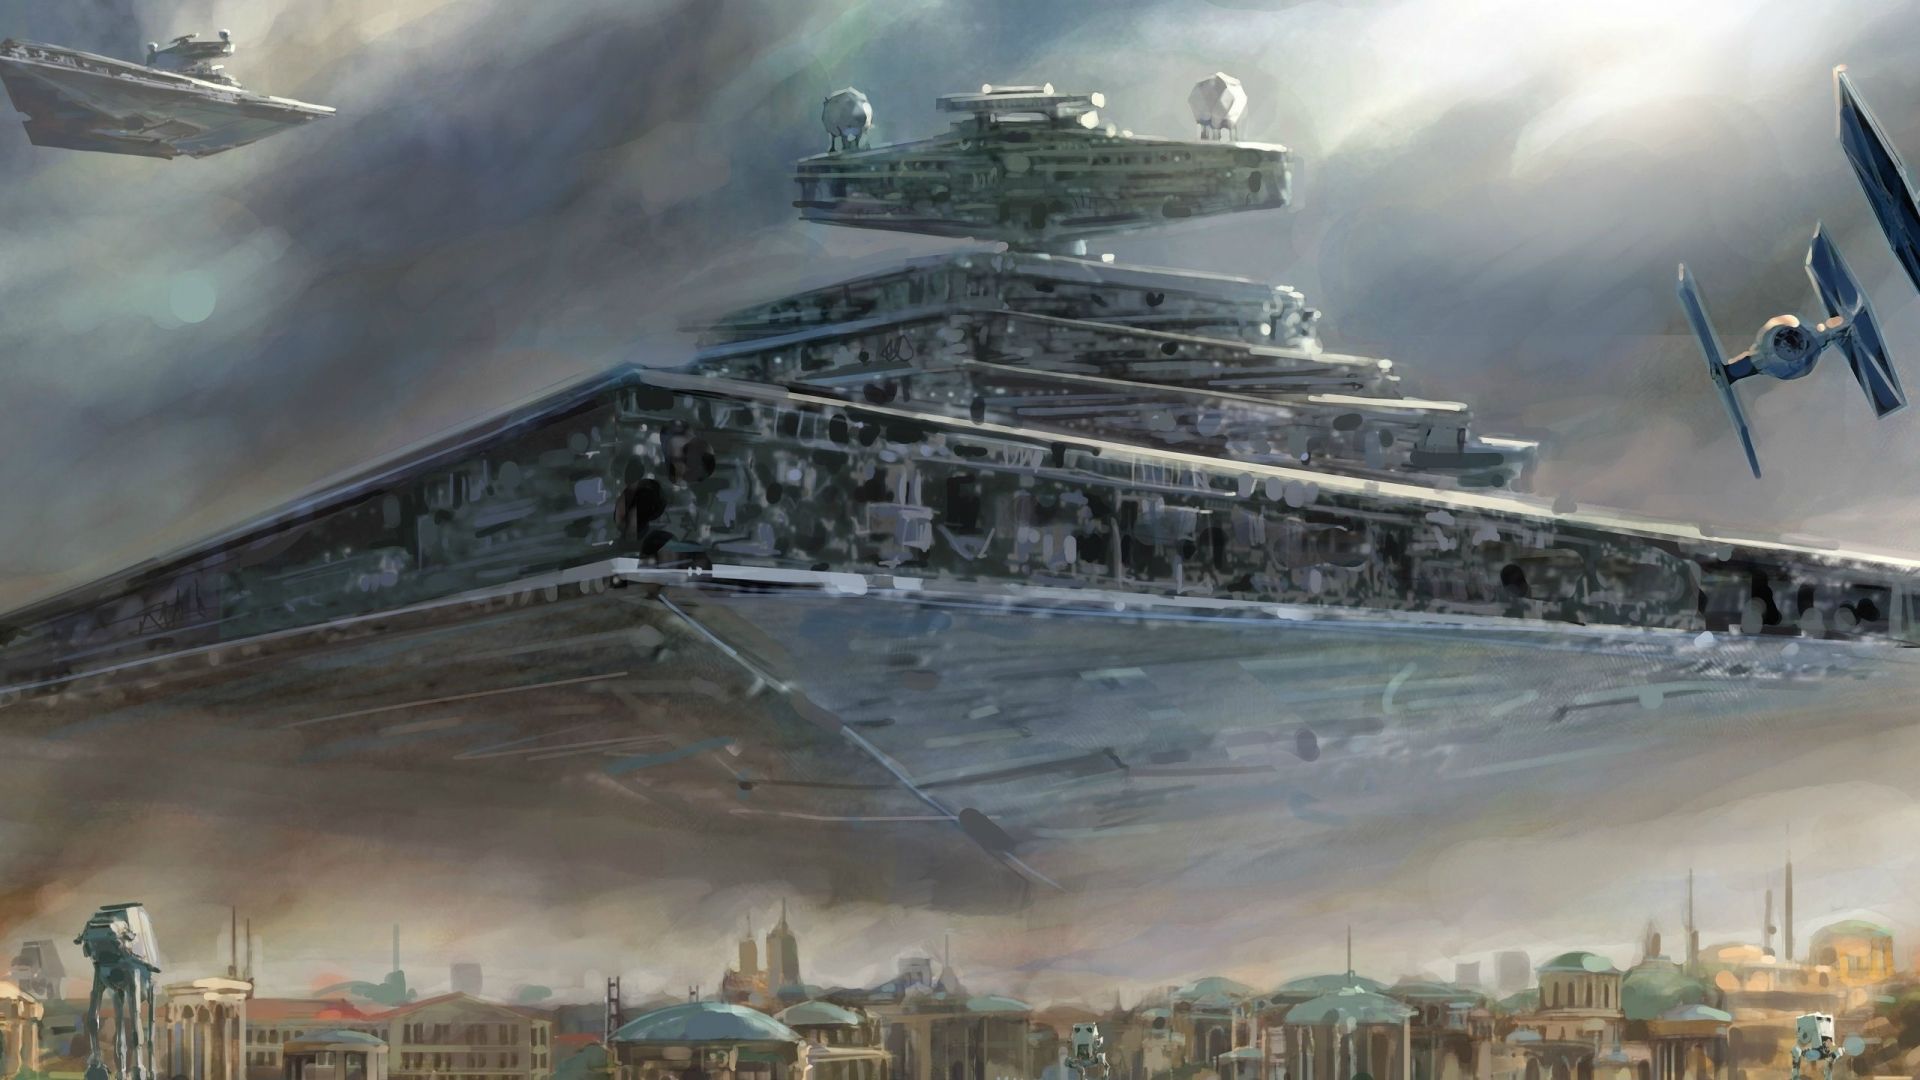 Free download Star wars spaceships atat artwork vehicles tie